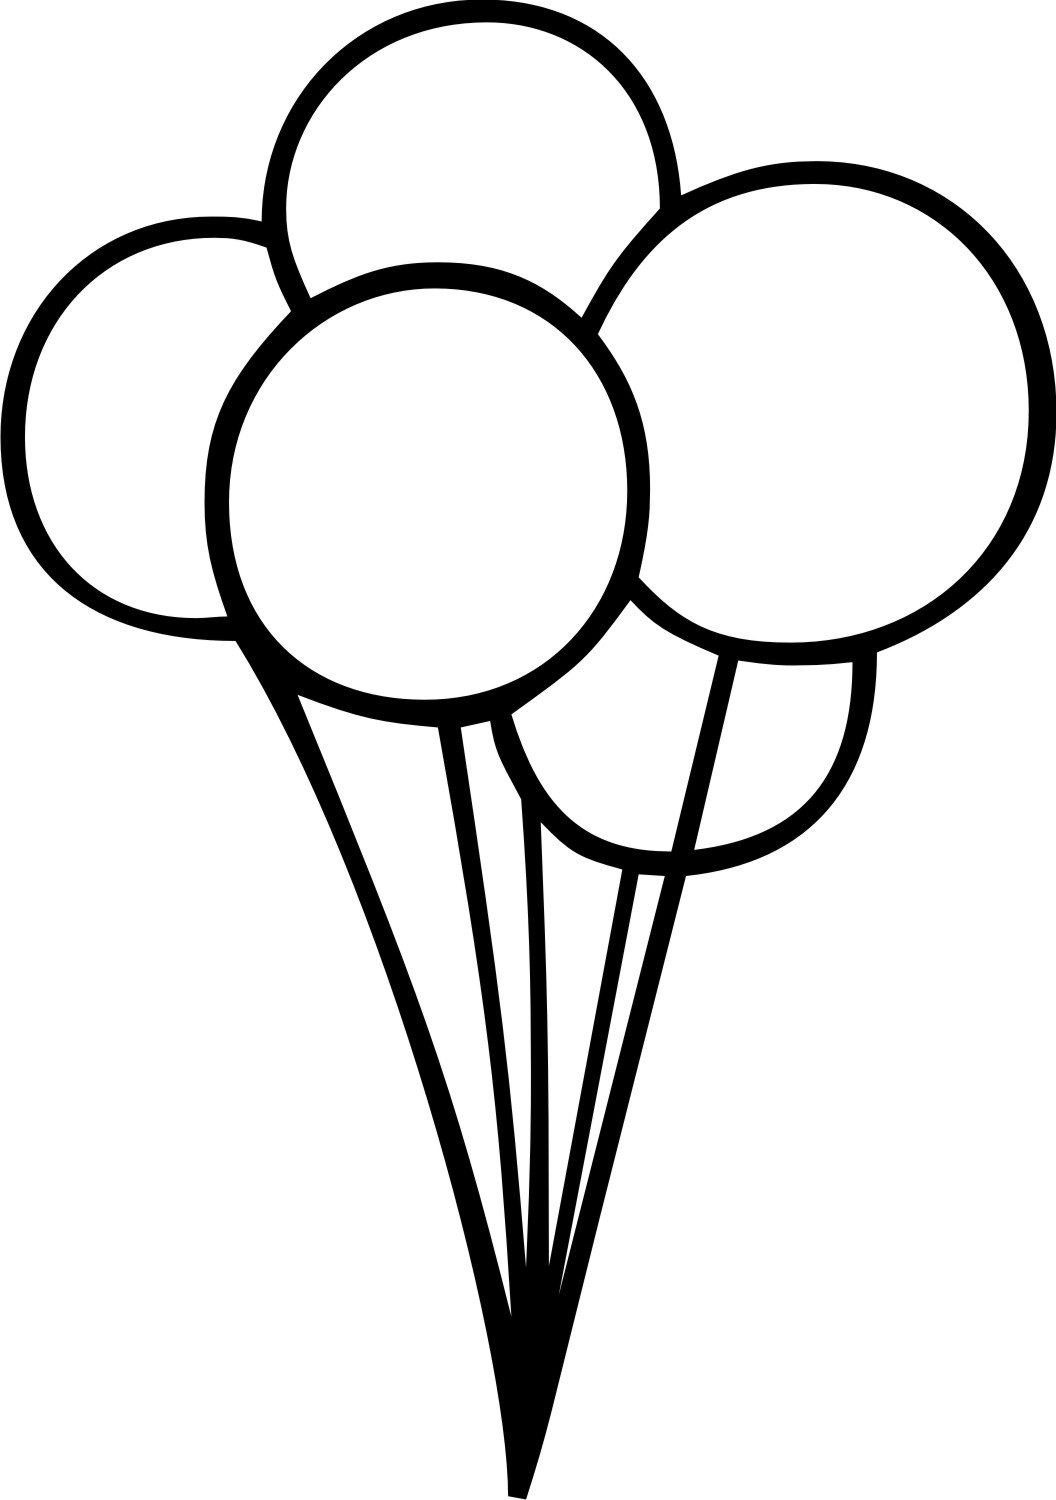 Balloon clipart outline